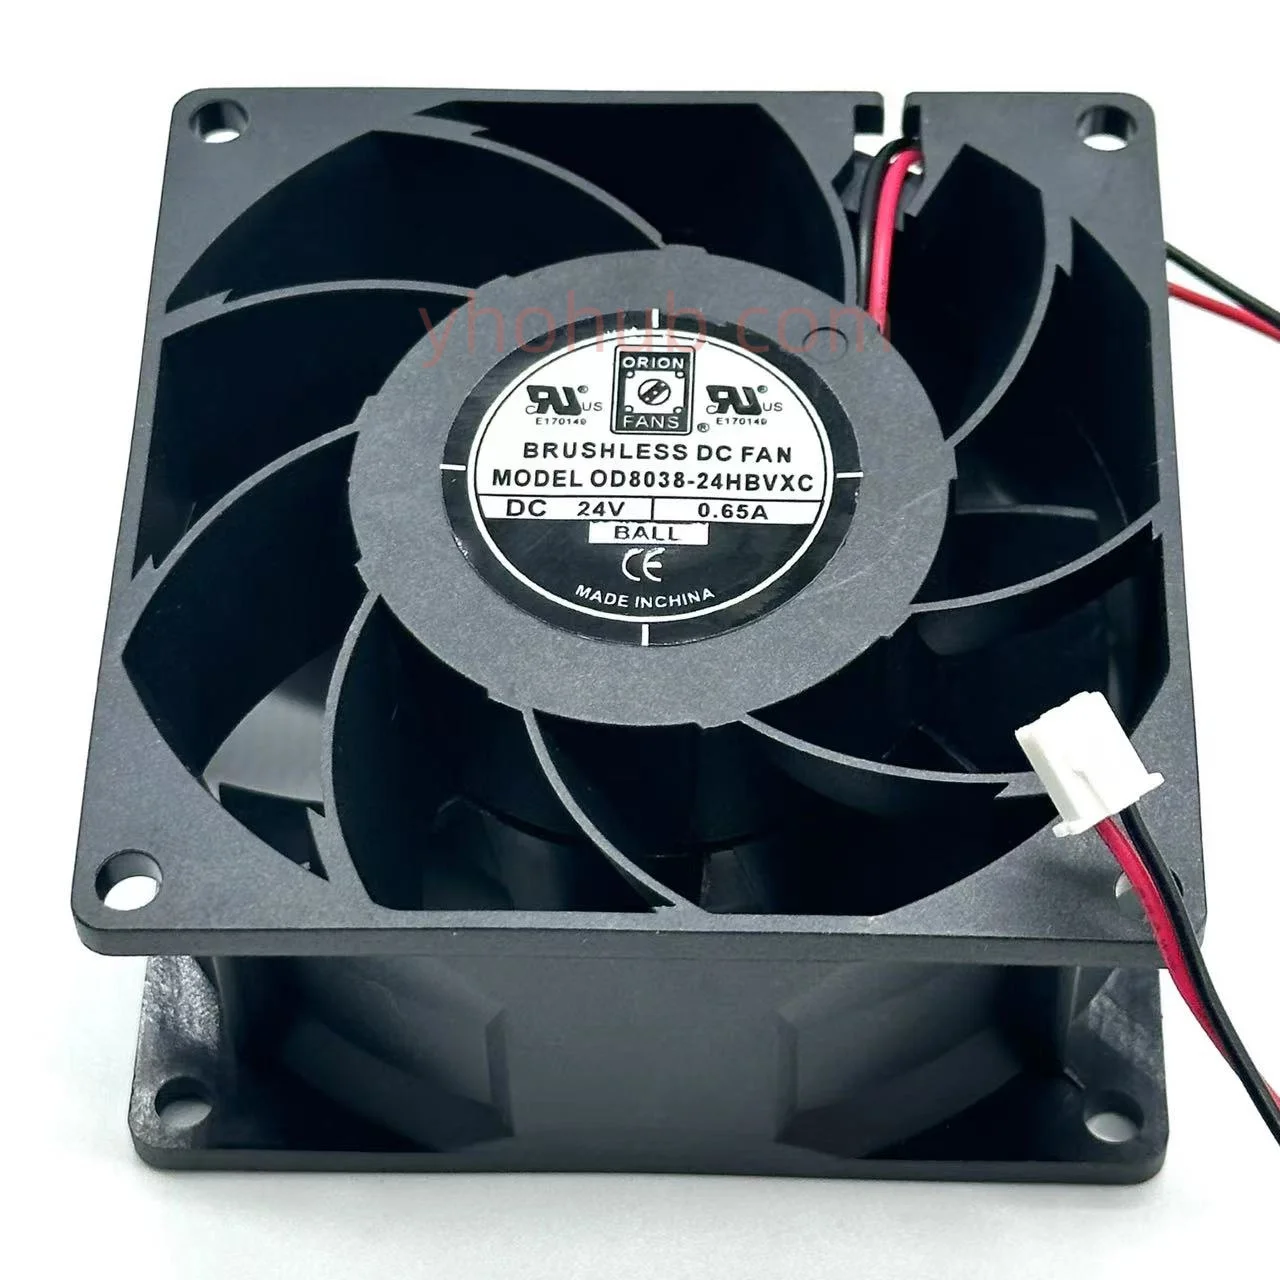 

OD8038-24HBVXC DC 24V 0.65A 80x80x38mm 2-Wire Server Cooling Fan